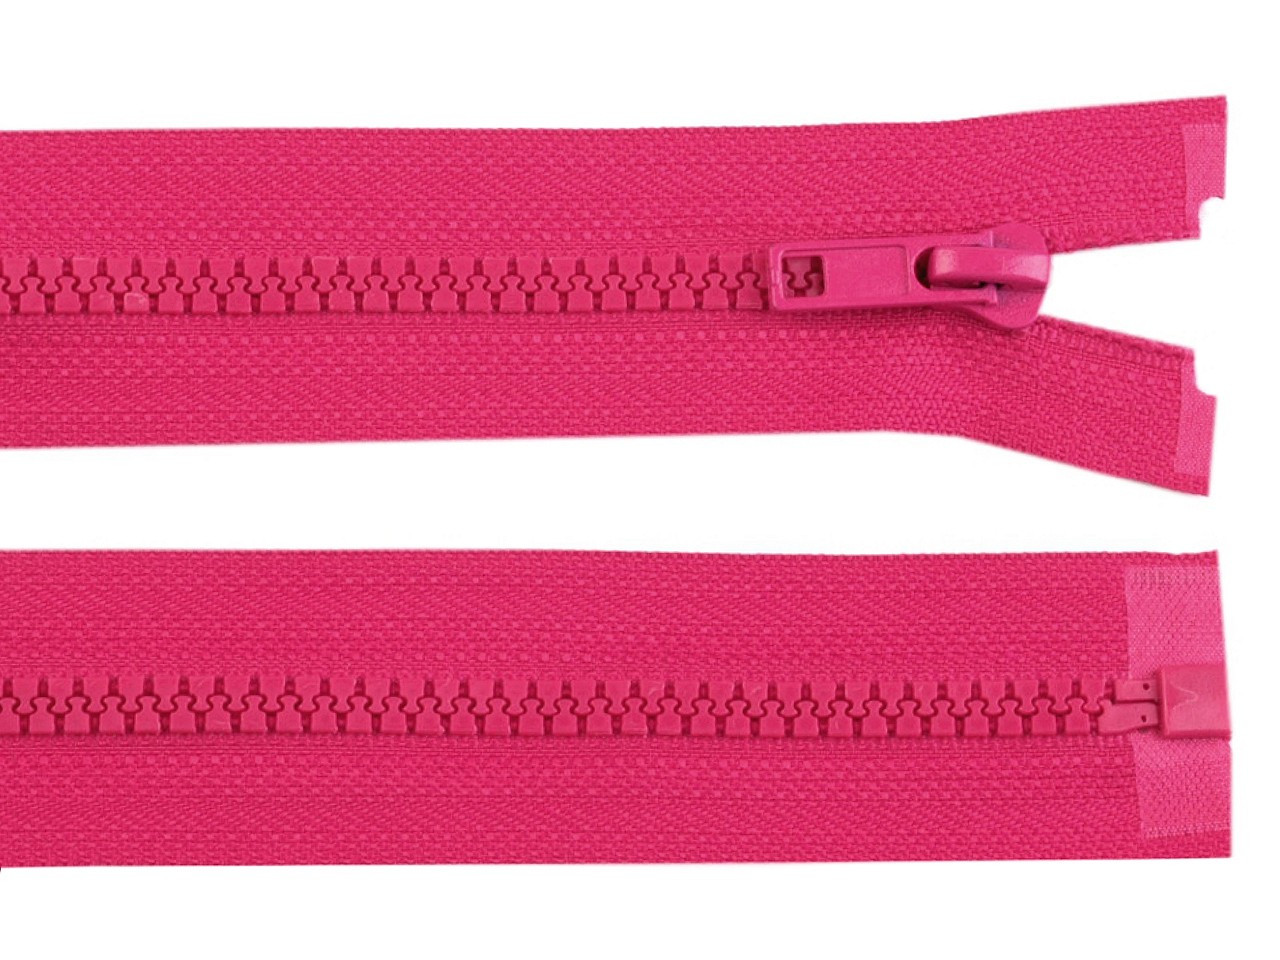 Kostěný zip No 5 délka 65 cm bundový, barva 145 pink